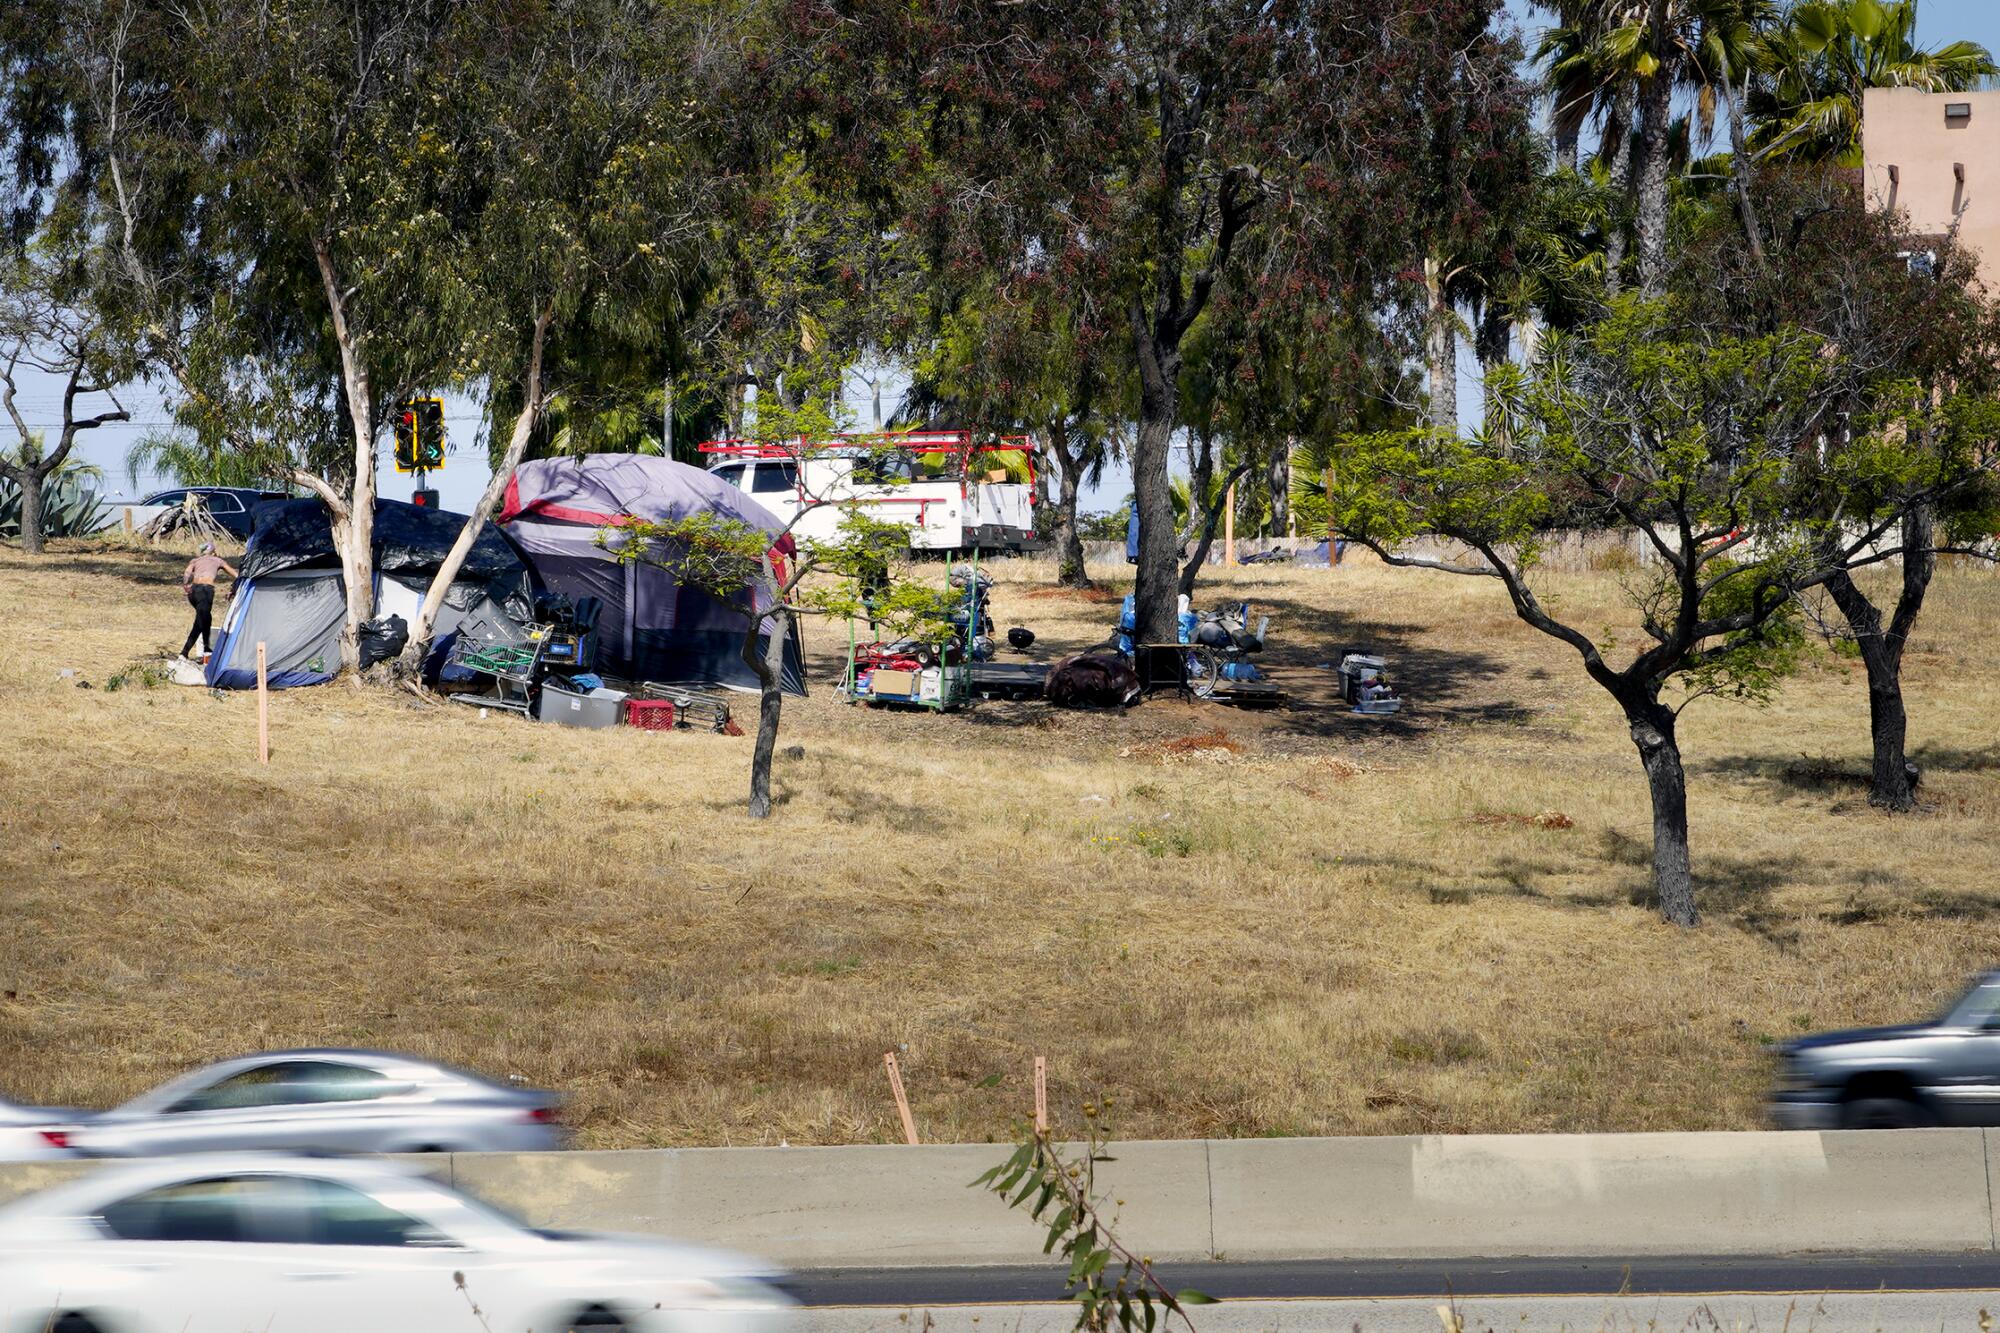 An encampment near the Palomar Street offramp on northbound Interstate 5 in Chula Vista.